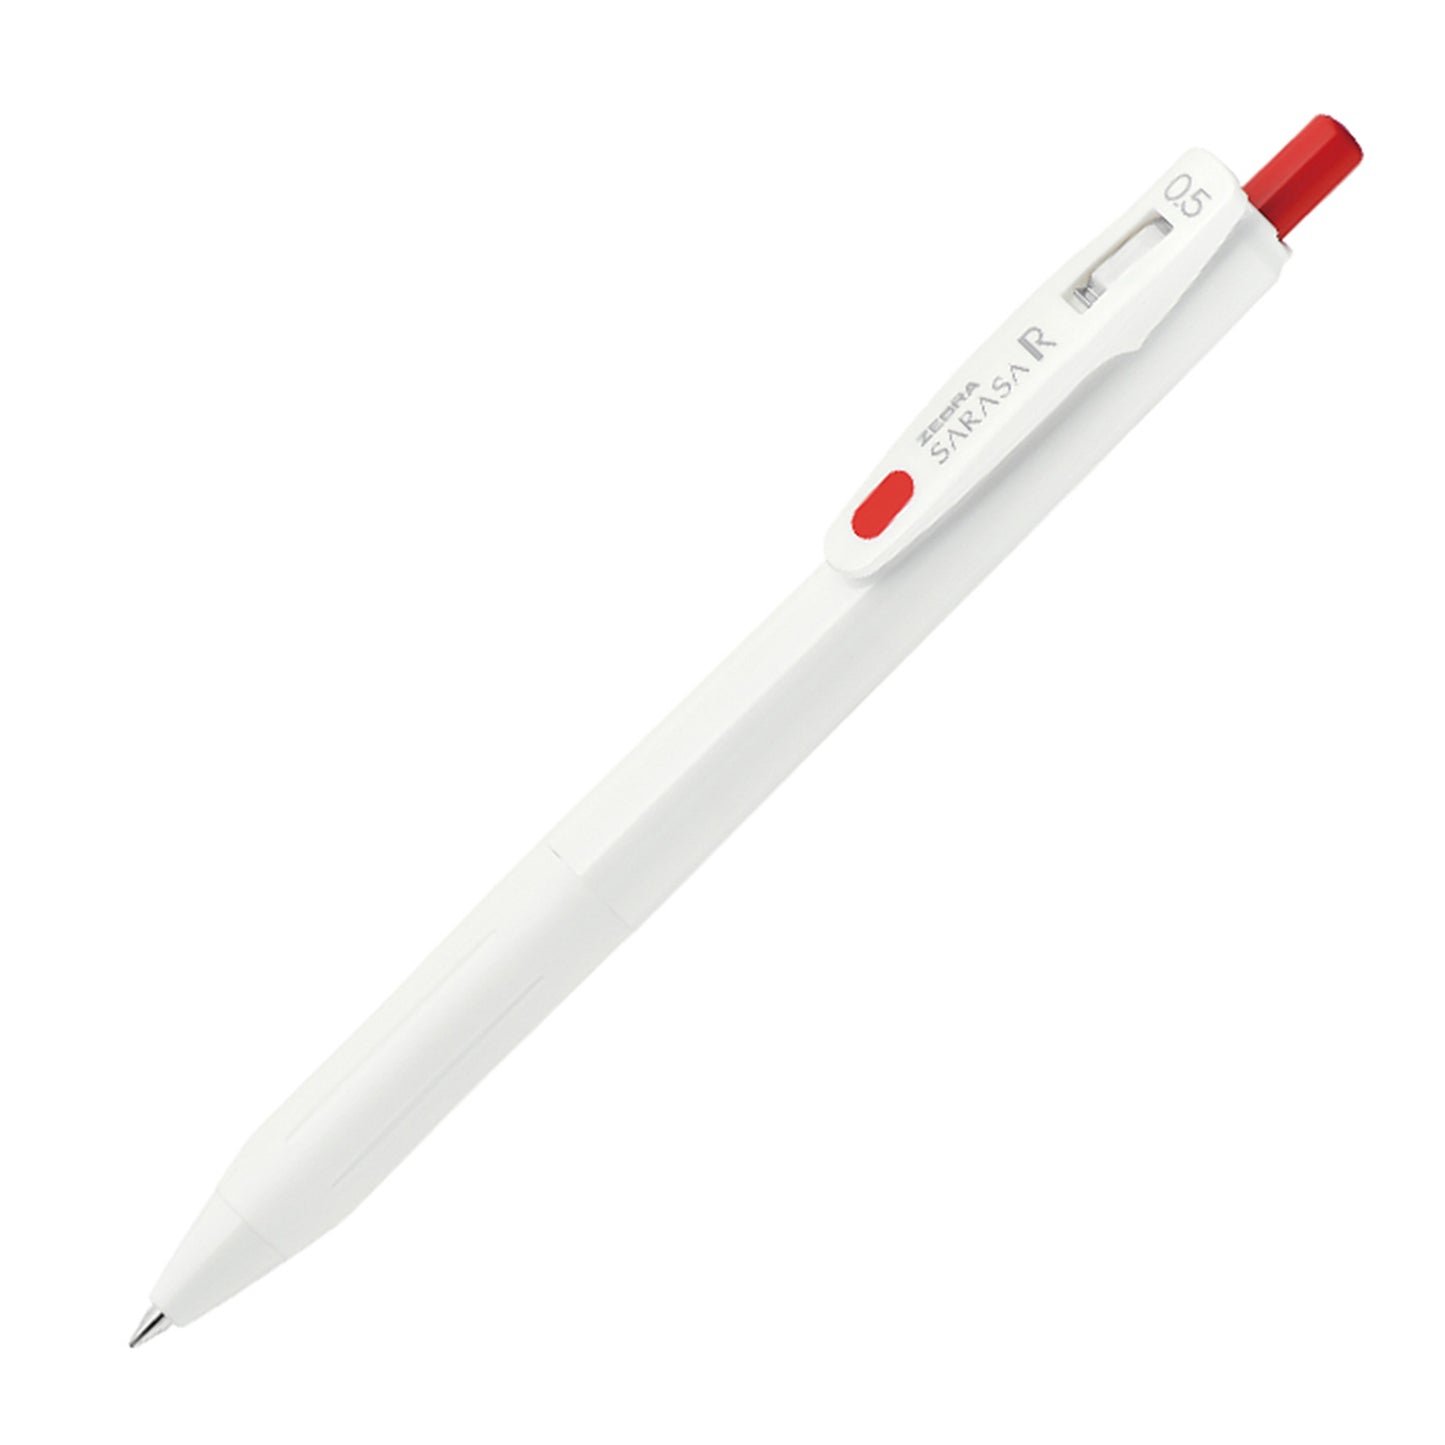 Sarasa R 0.5mm Gel Ink Ballpoint Pen / Zebra